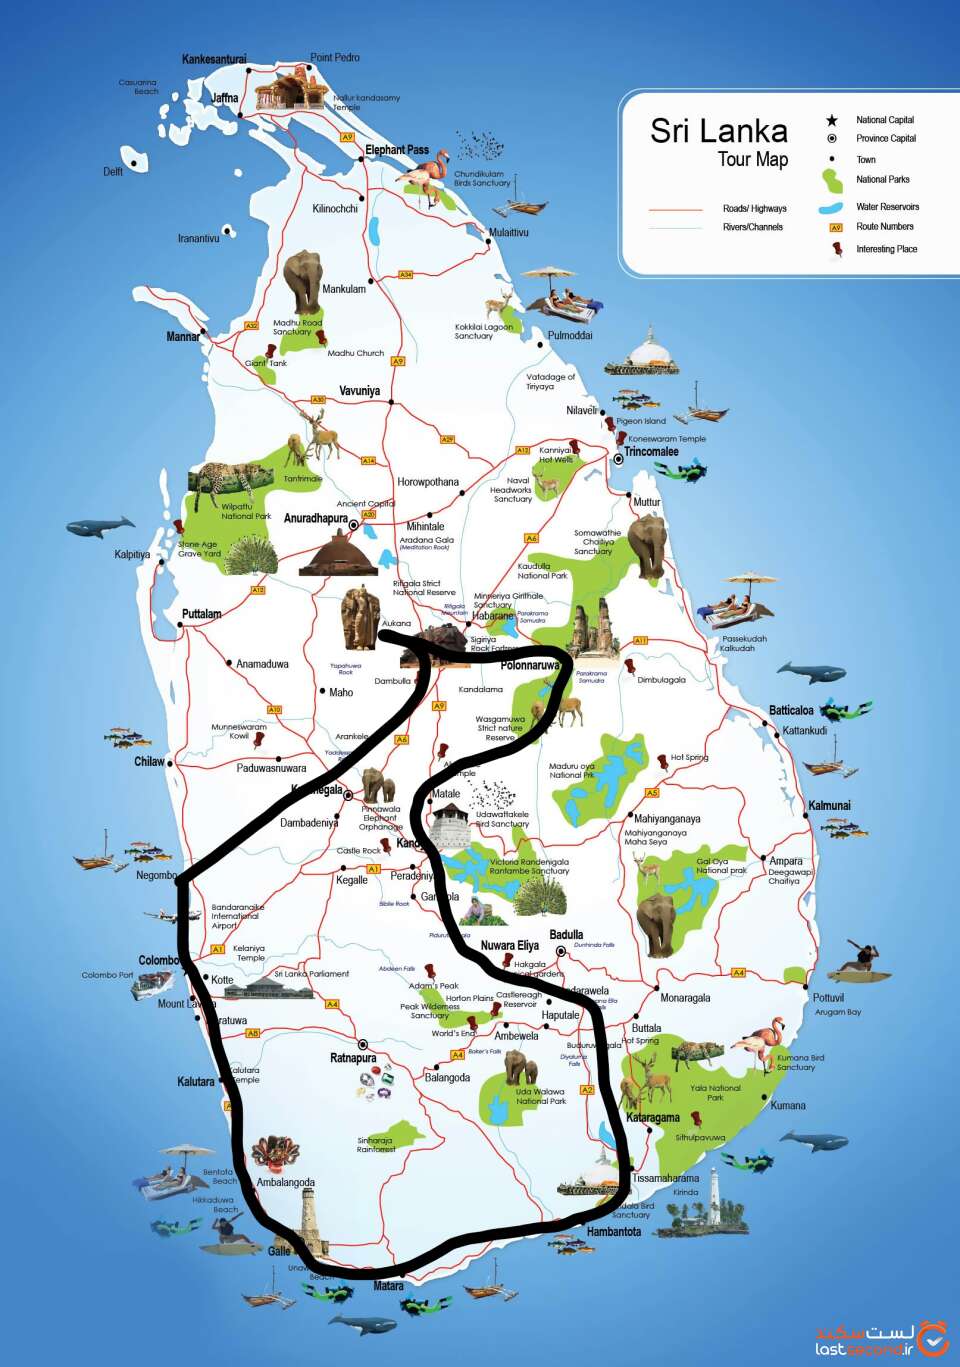 Inkedlarge-detailed-tourist-map-of-sri-lanka_LI.jpg